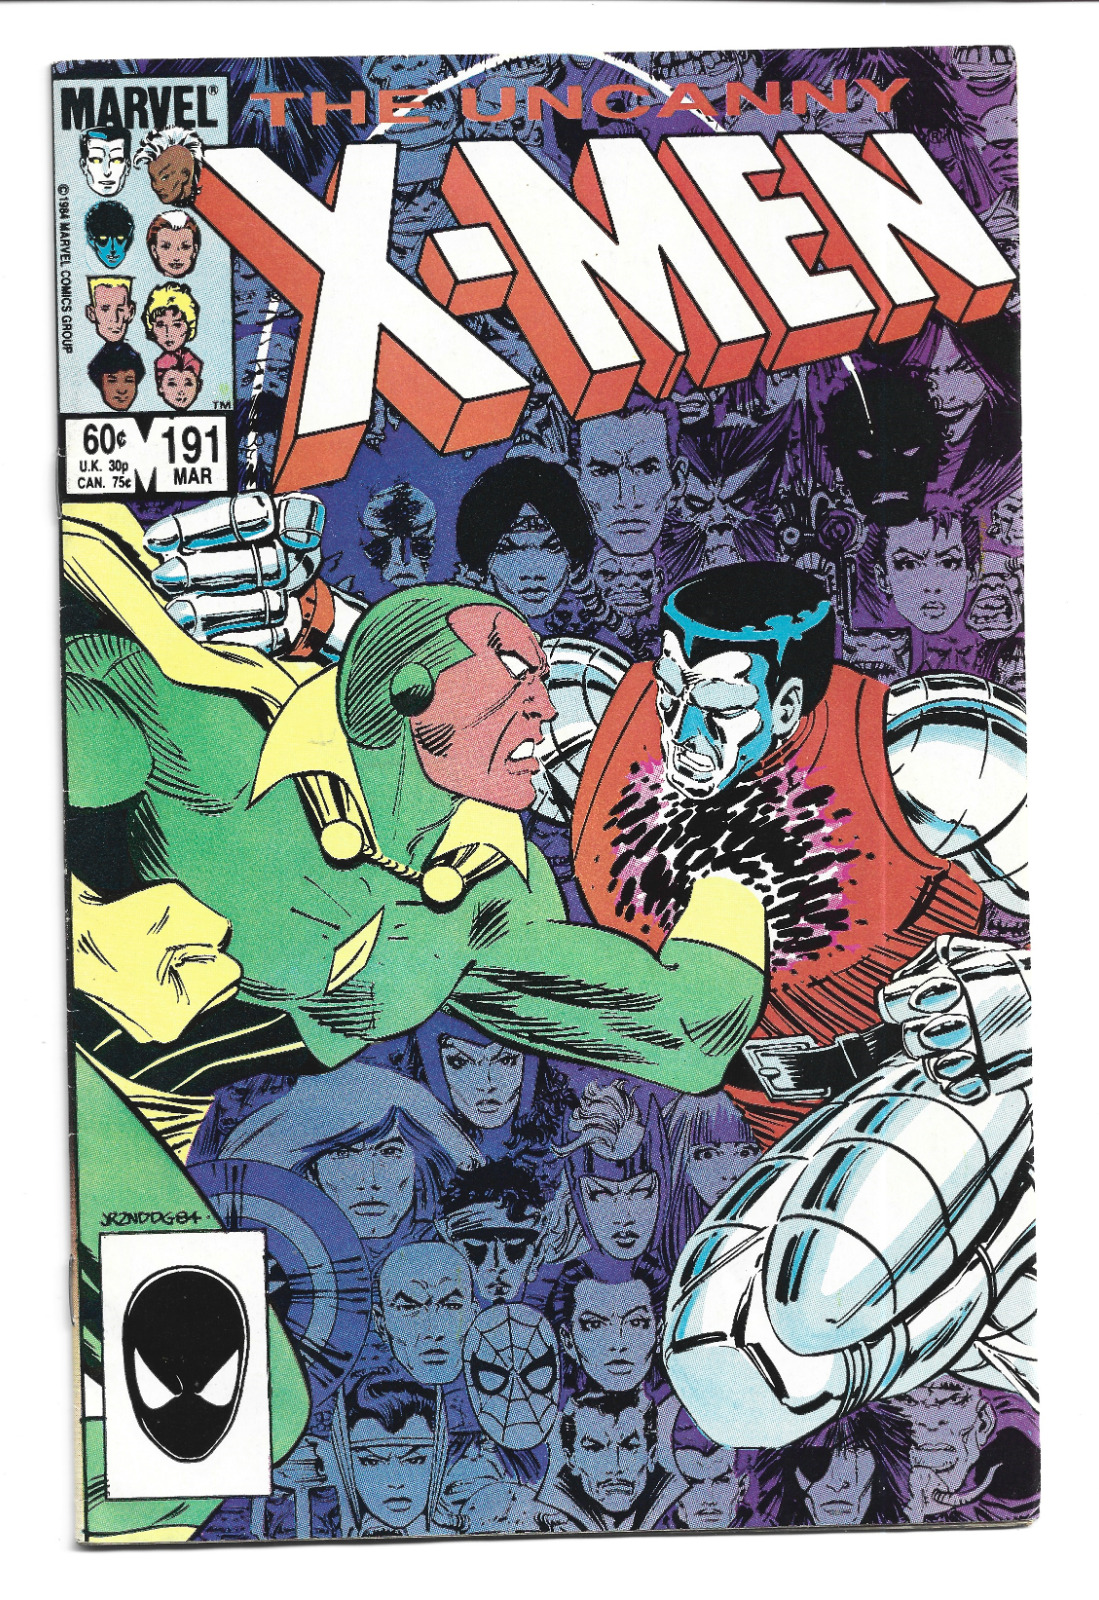 Uncanny X-Men # 191 (Mar, 1985) 1st Appearance of Nimrod (Marvel Comics) (VF)